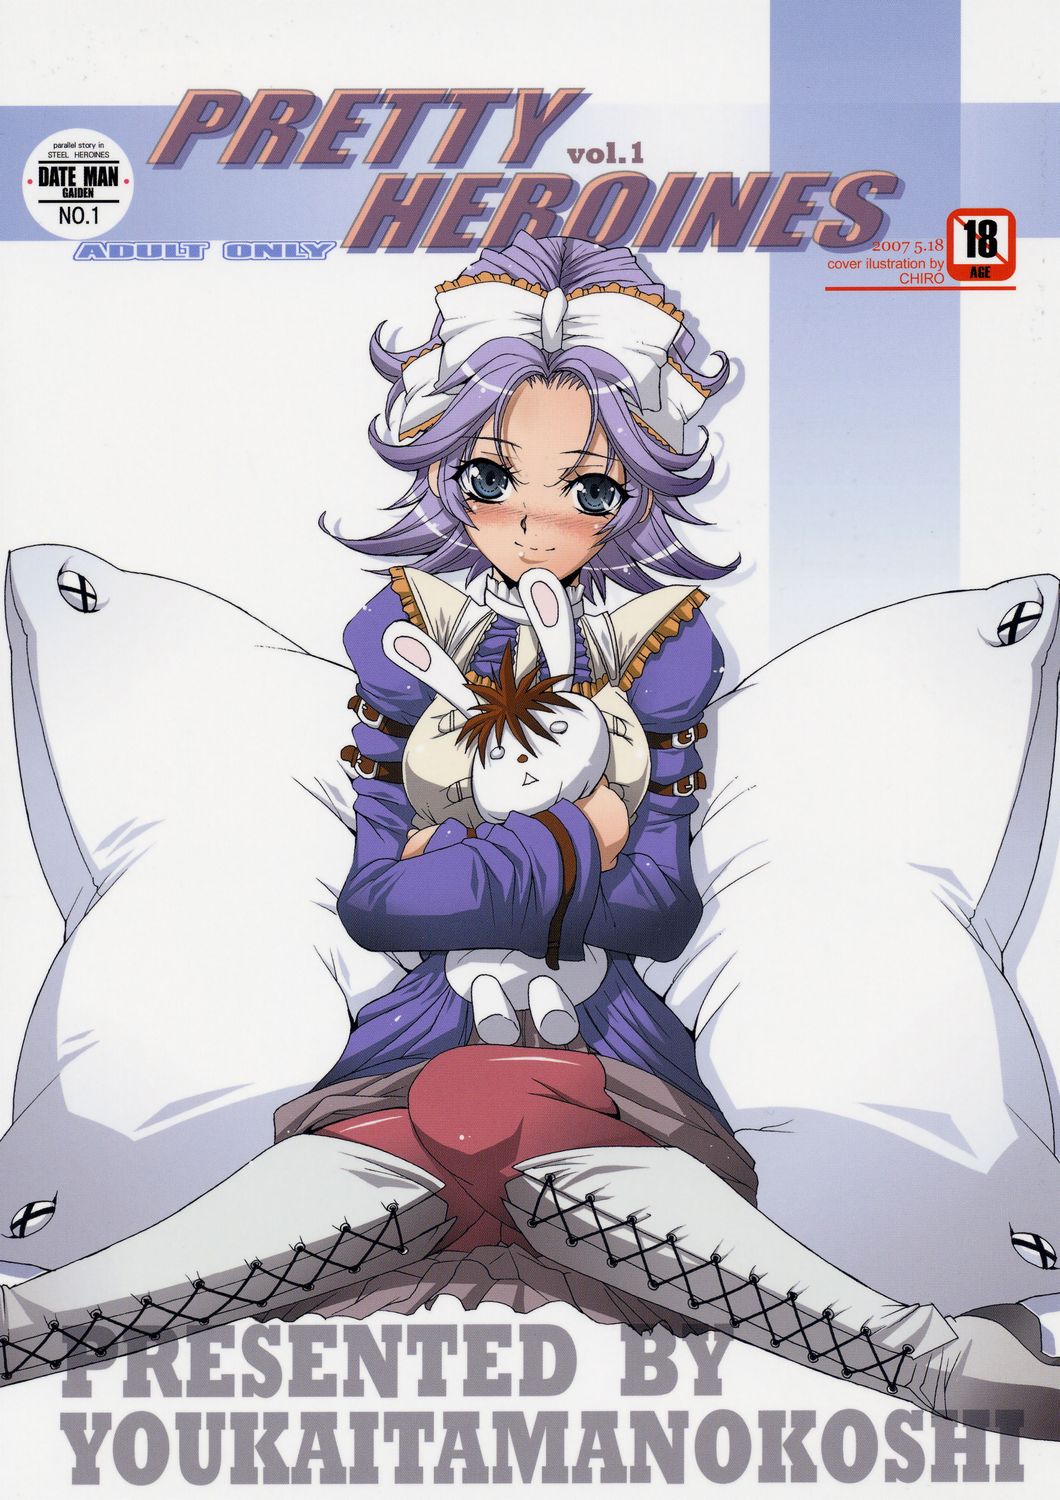 [Youkai Tamanokoshi] Pretty Heroines Vol. 1 [Super Robot Wars Original Generations] 